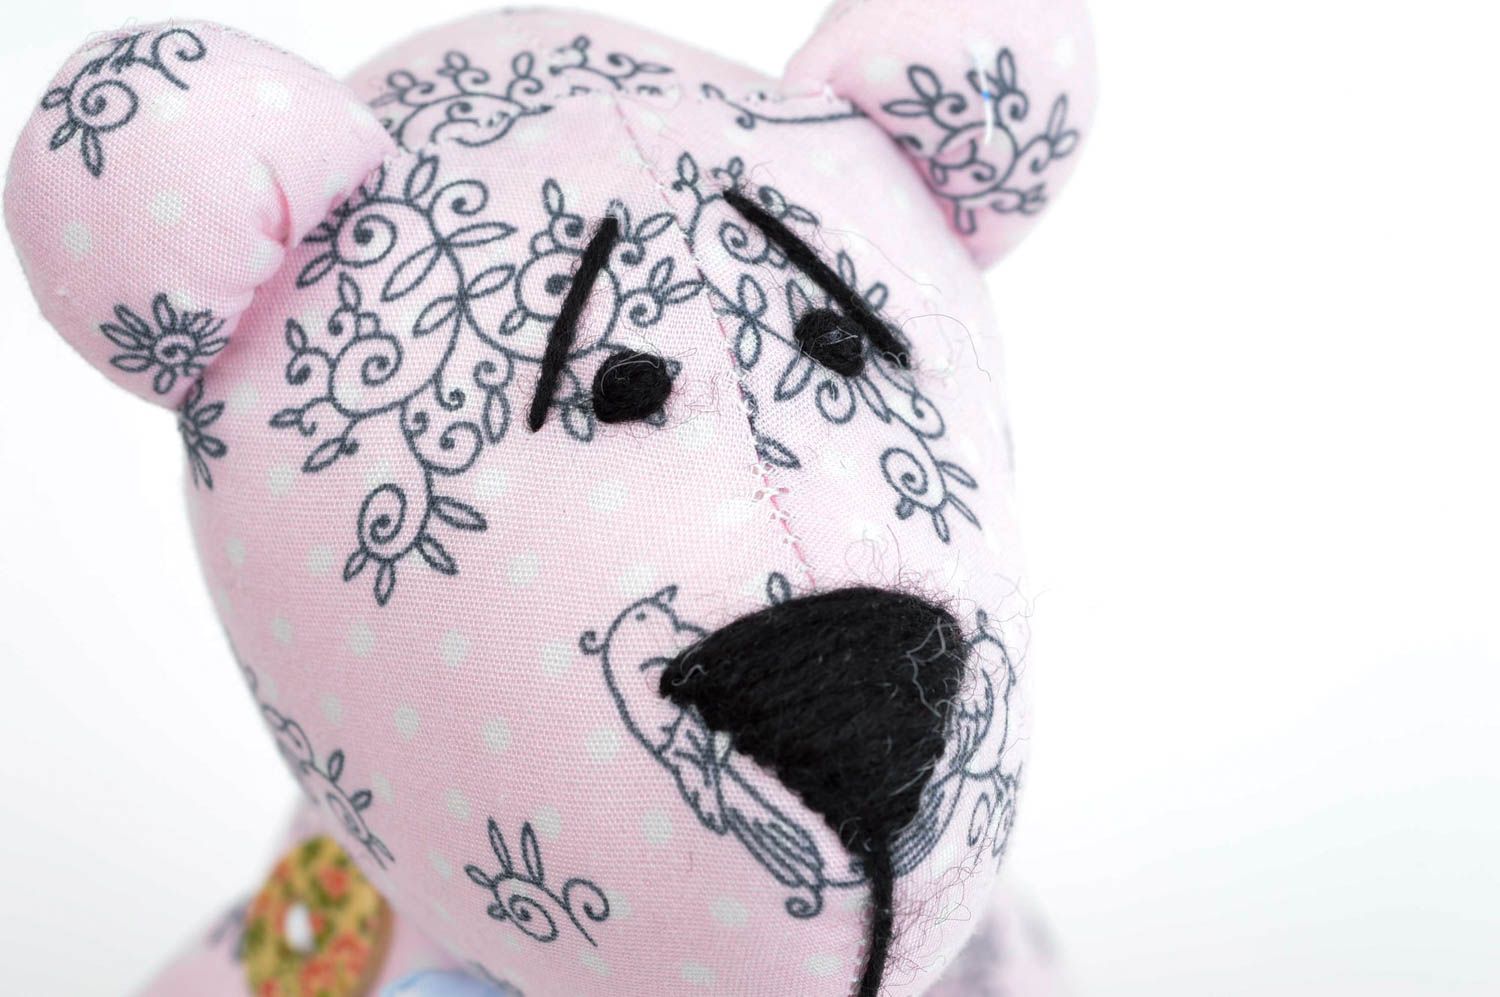 Unusual handmade fabric soft toy stuffed bear toy living room designs gift ideas photo 5